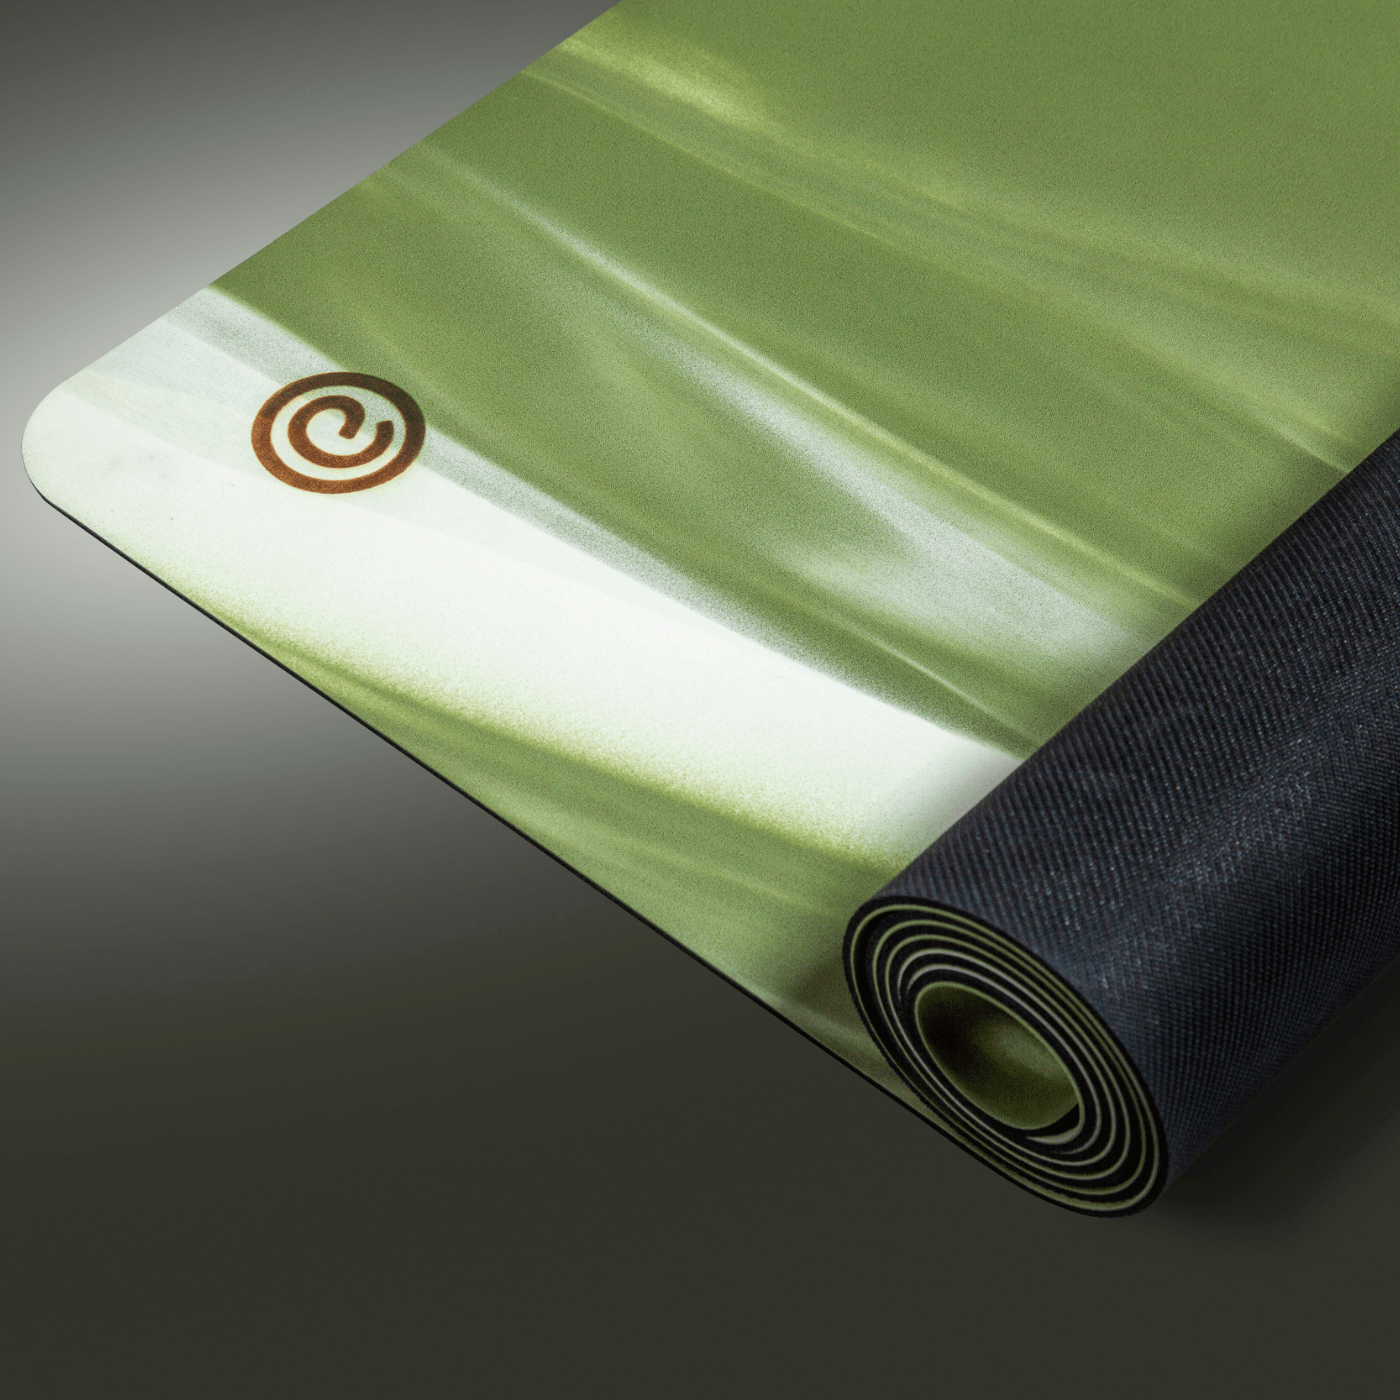 Tapete de Yoga em PU 4.5mm  PRO Colors Tie Dye - Ekomat Yoga